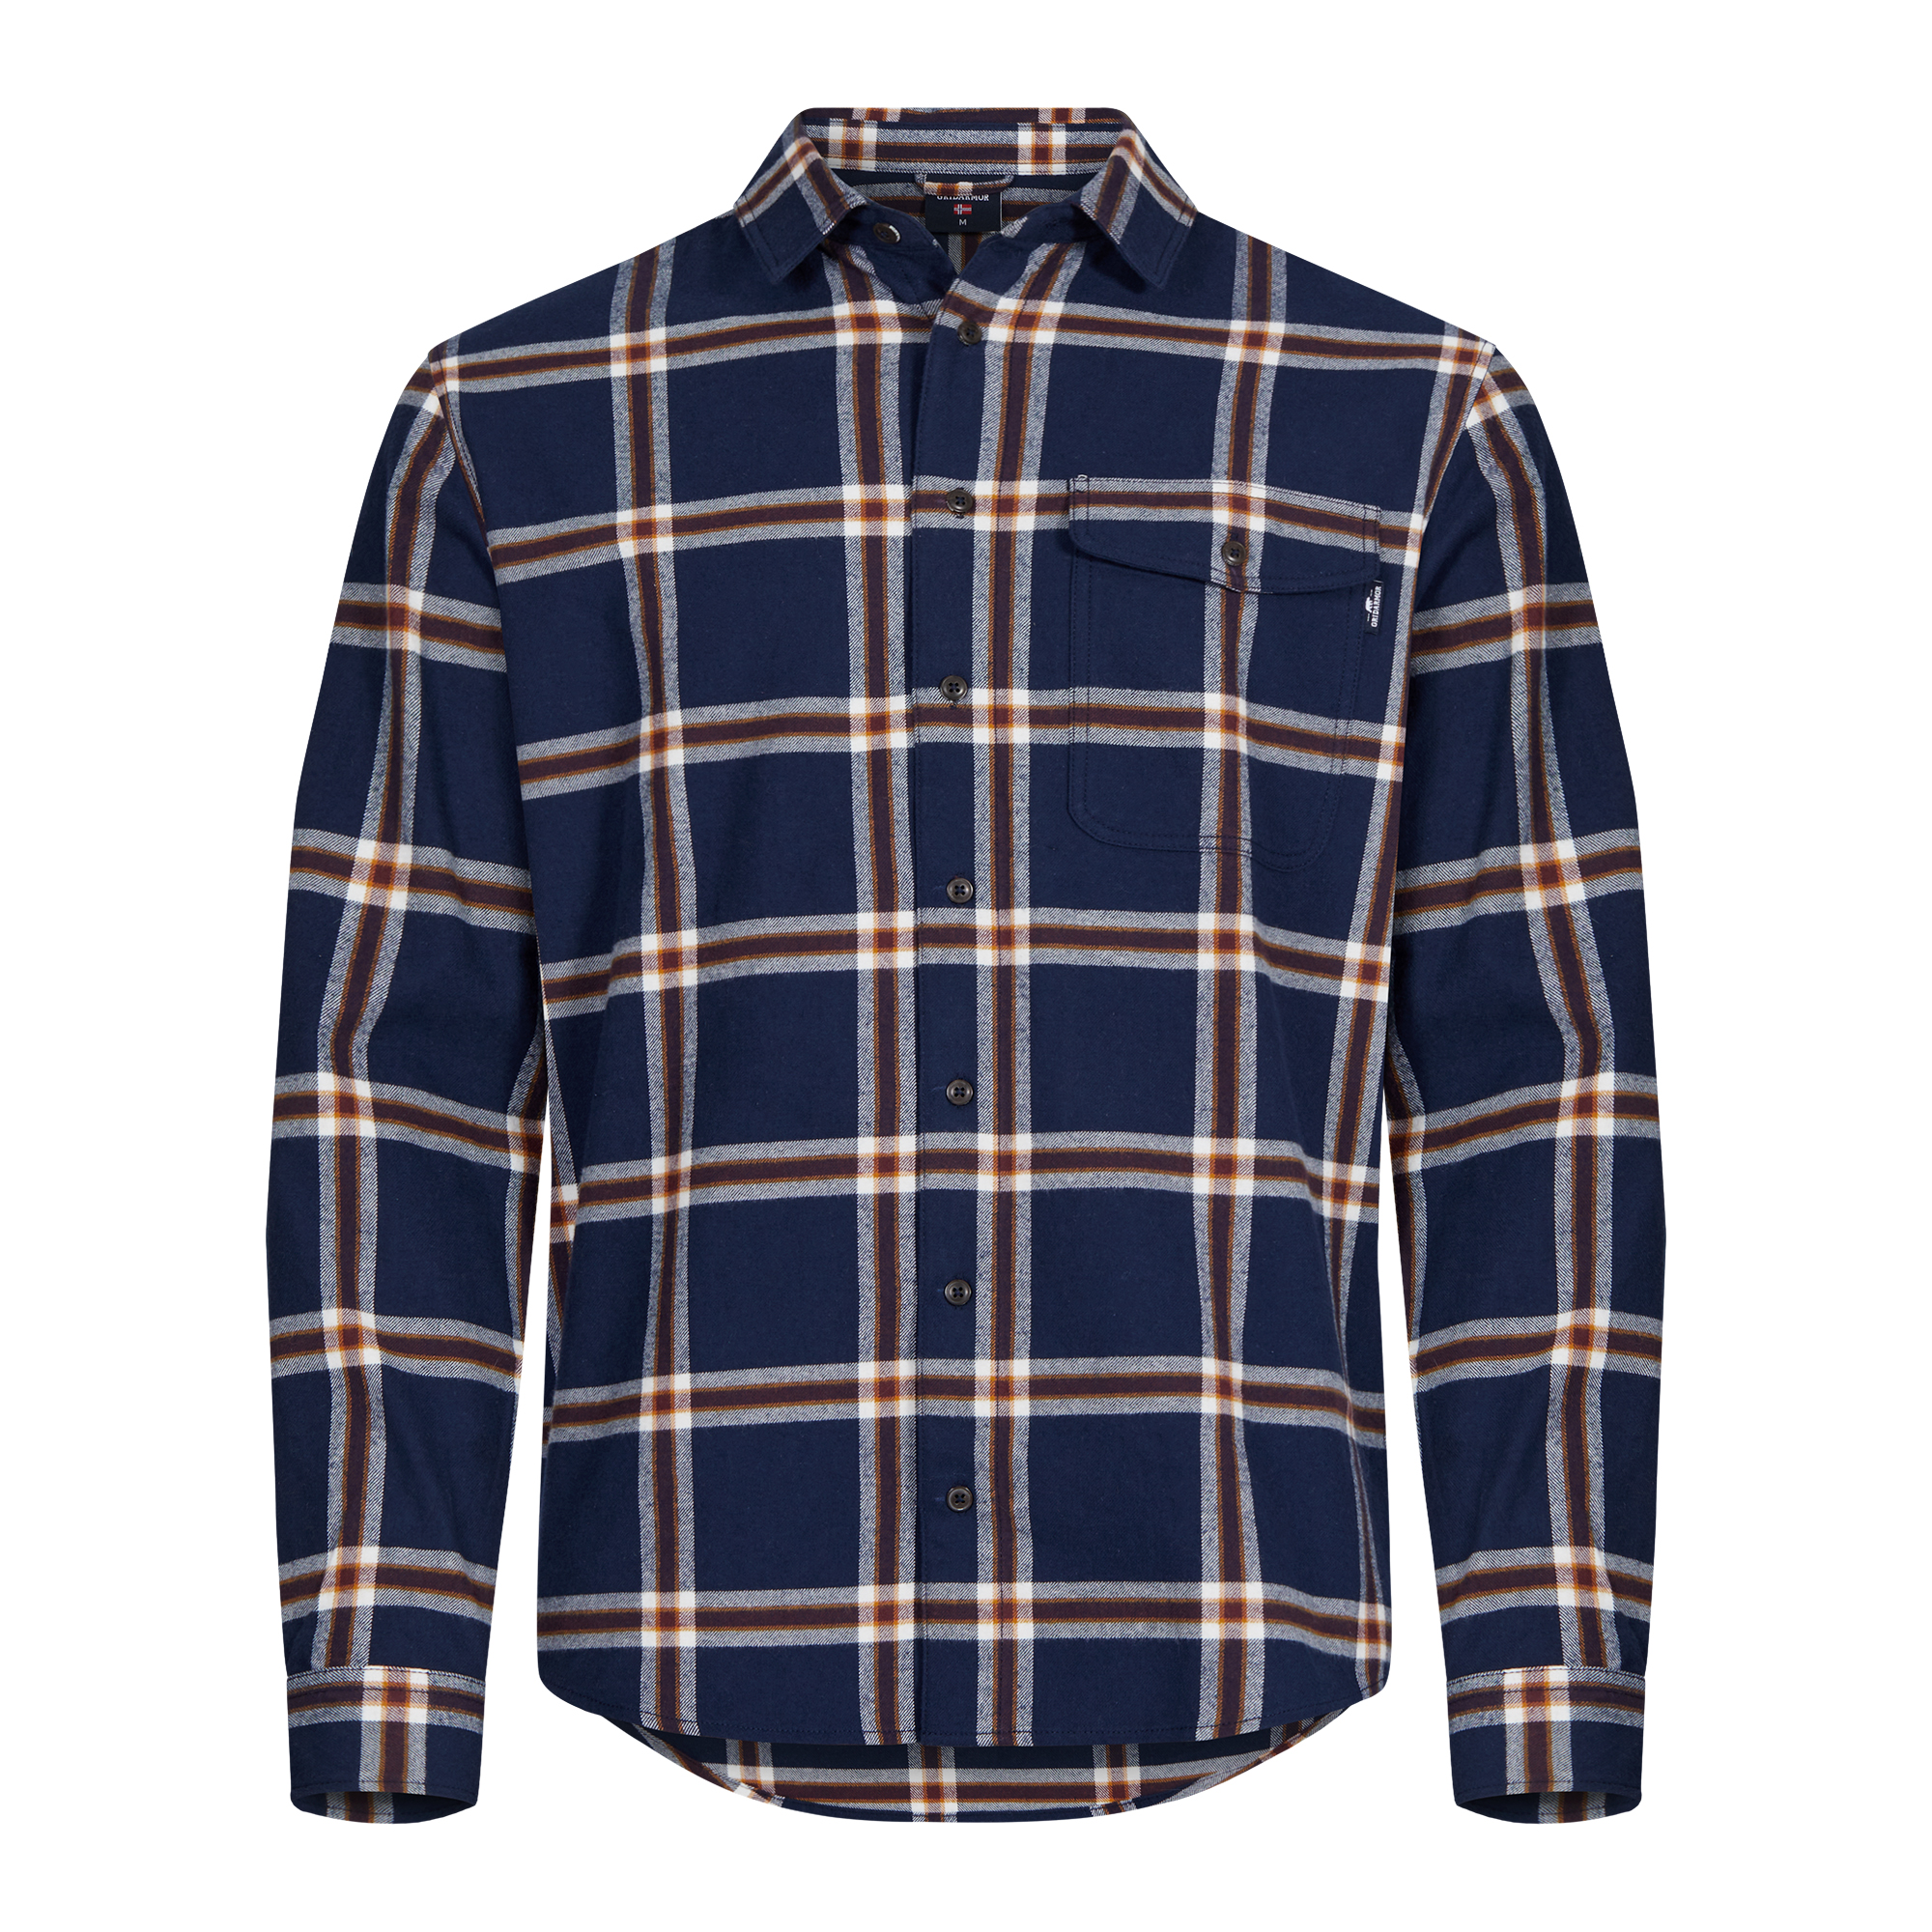 Gridarmor Men’s Dale Flannel Shirt Navy Blazer